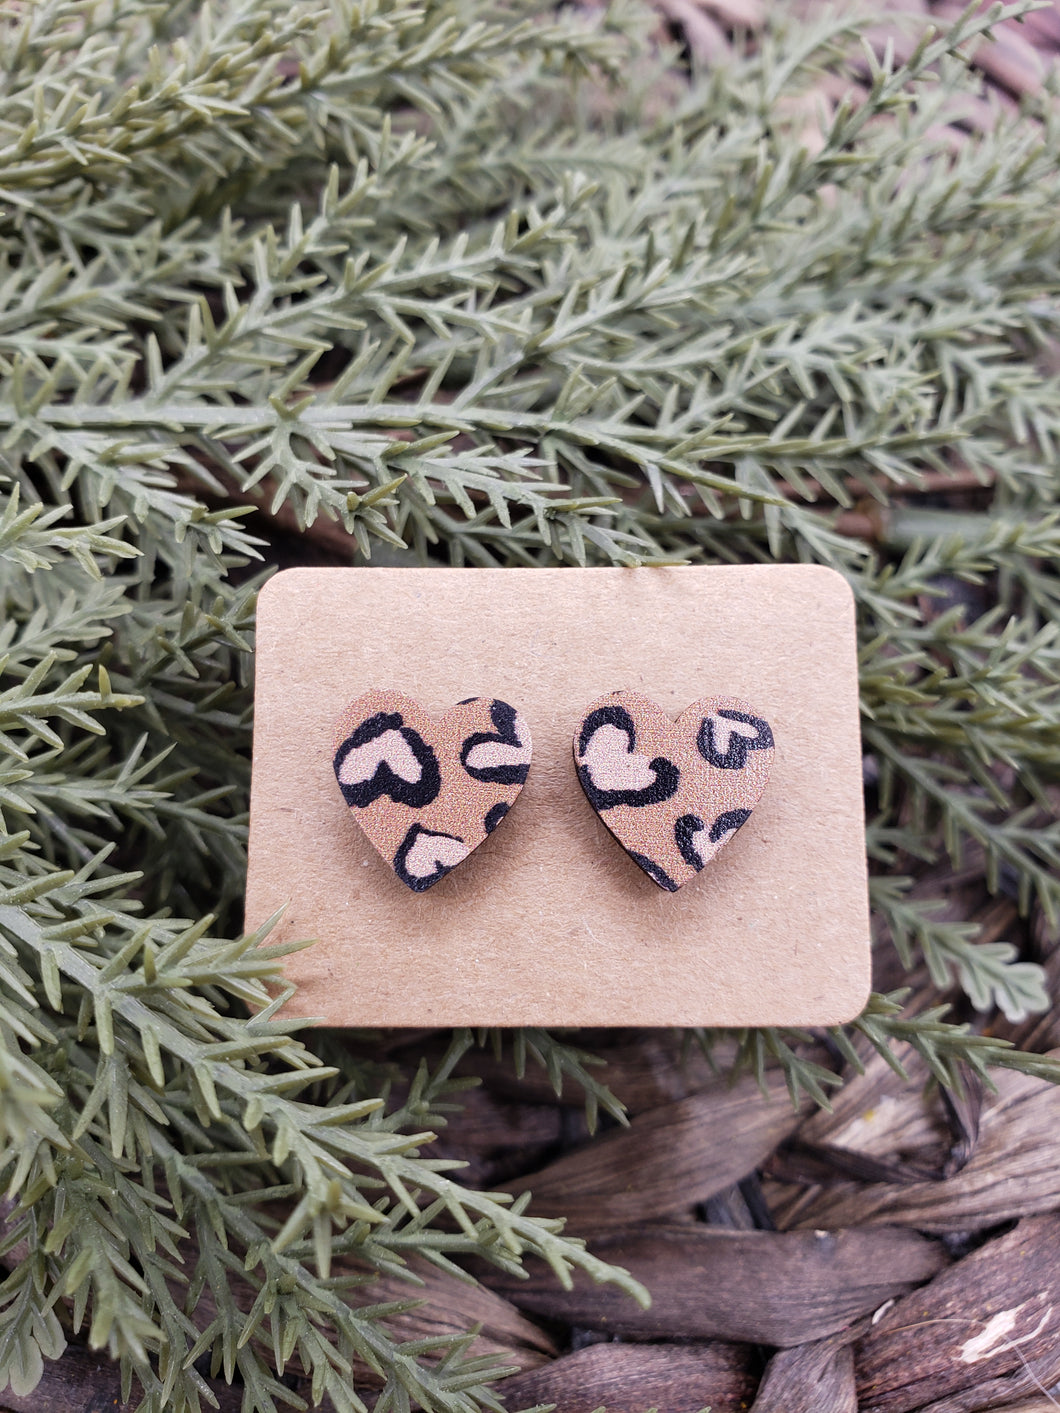 Wood Earrings - Hearts - Studs - Leopard - Animal Print - Valentine's Day - Tan - Black - Pink - White - Heart Earrings